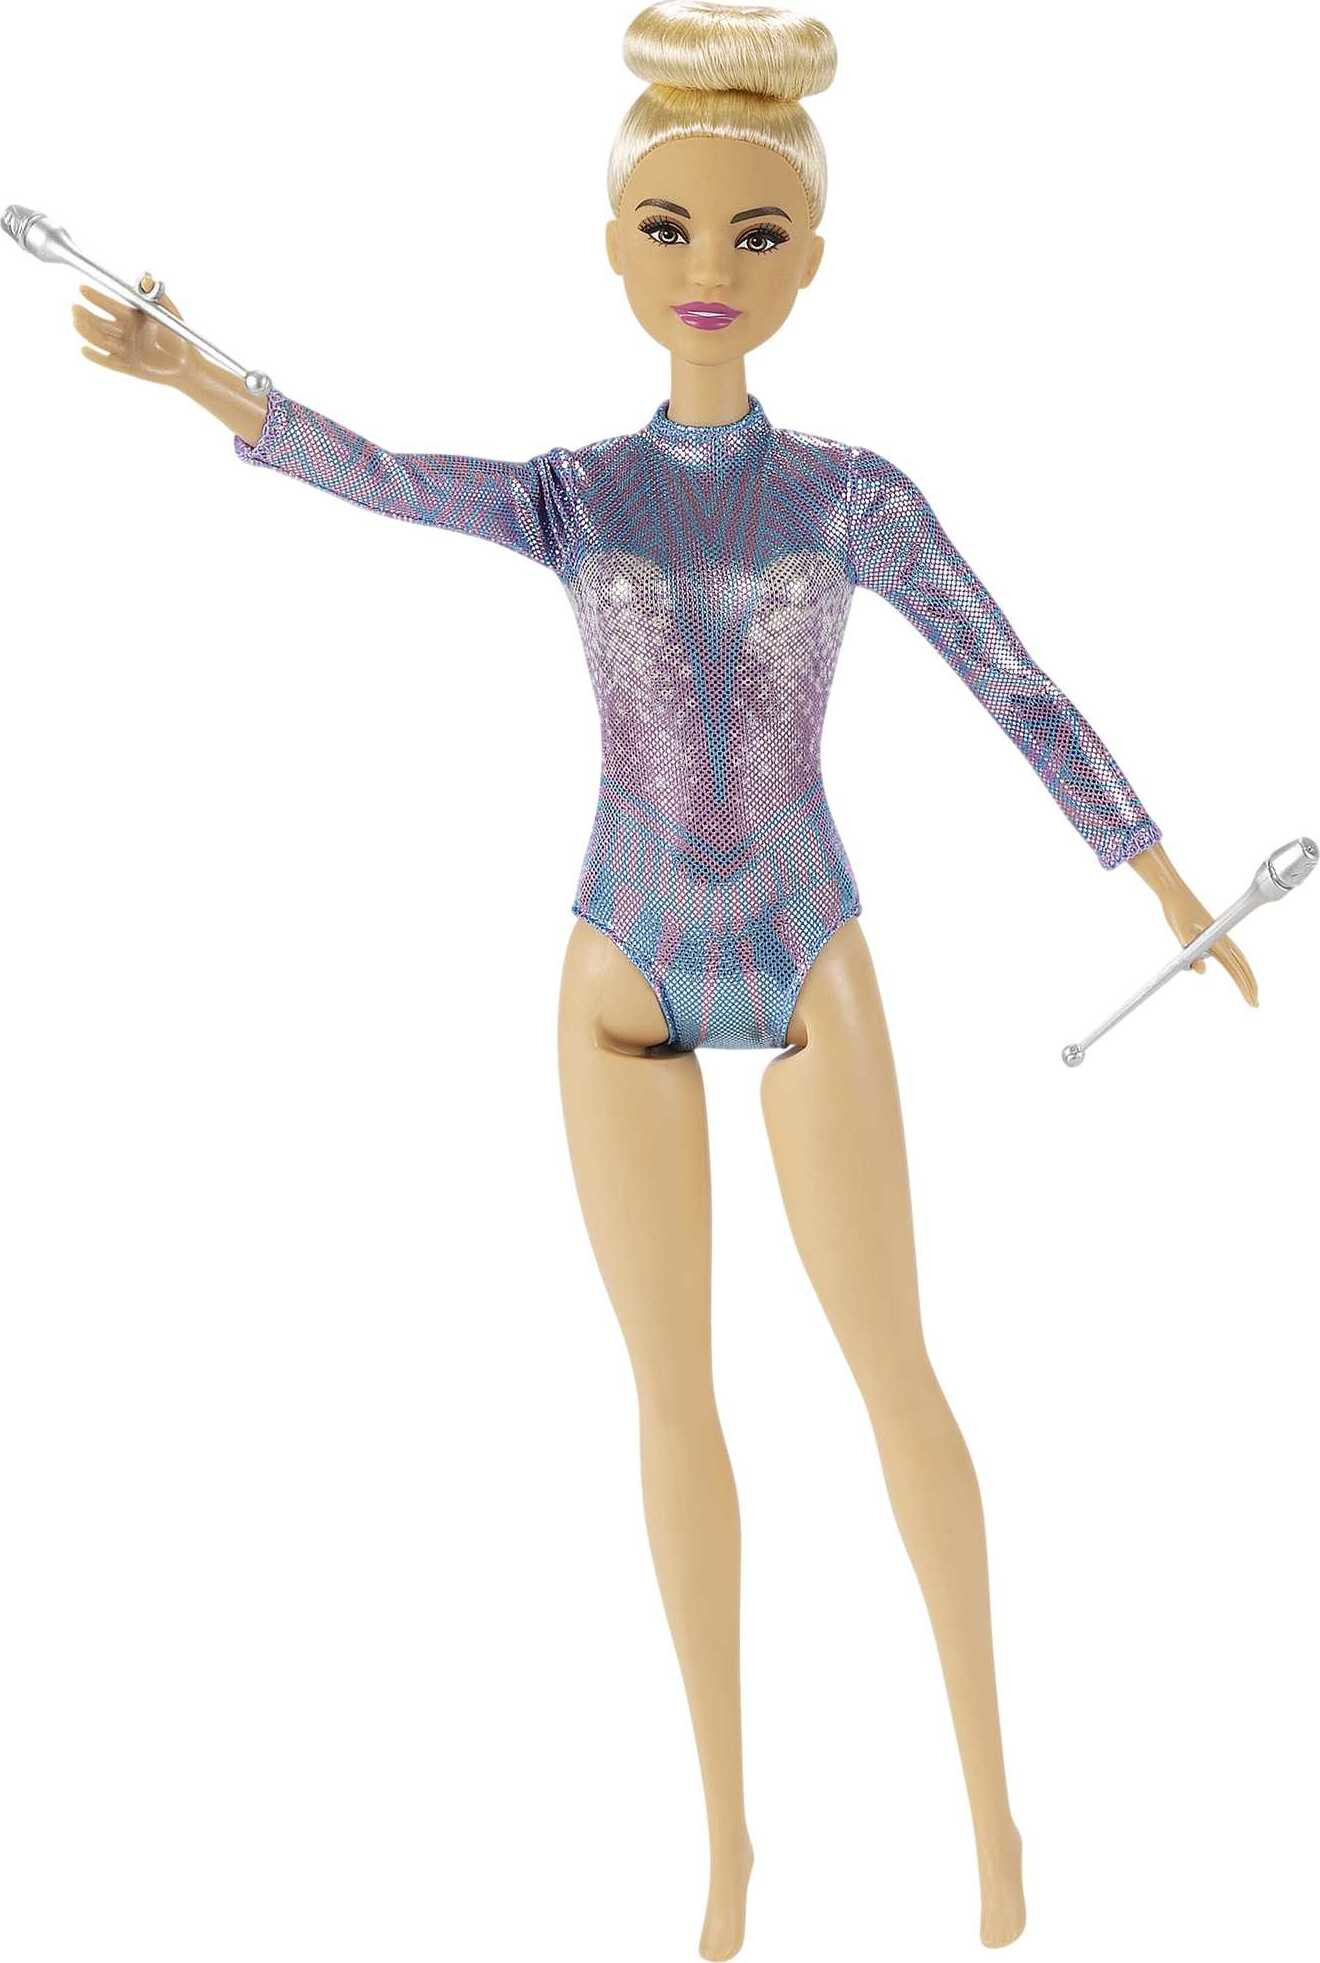 Barbie Rhythmic Gymnast Fashion Doll Dressed in Shimmery Leotard with Blonde Hair & Brown Eyes - image 4 of 6